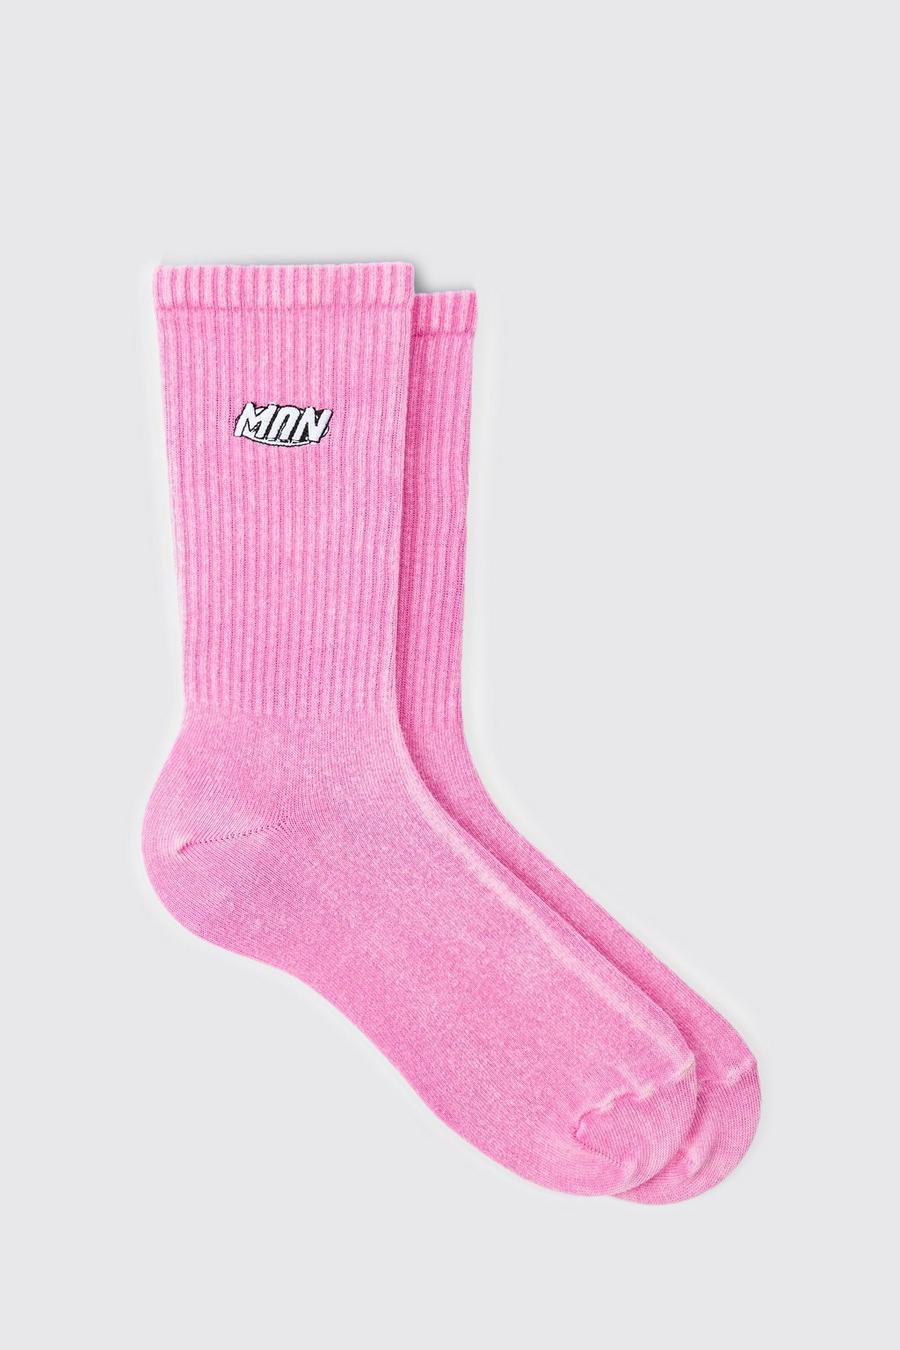 Acid Wash Man Socks In Pink